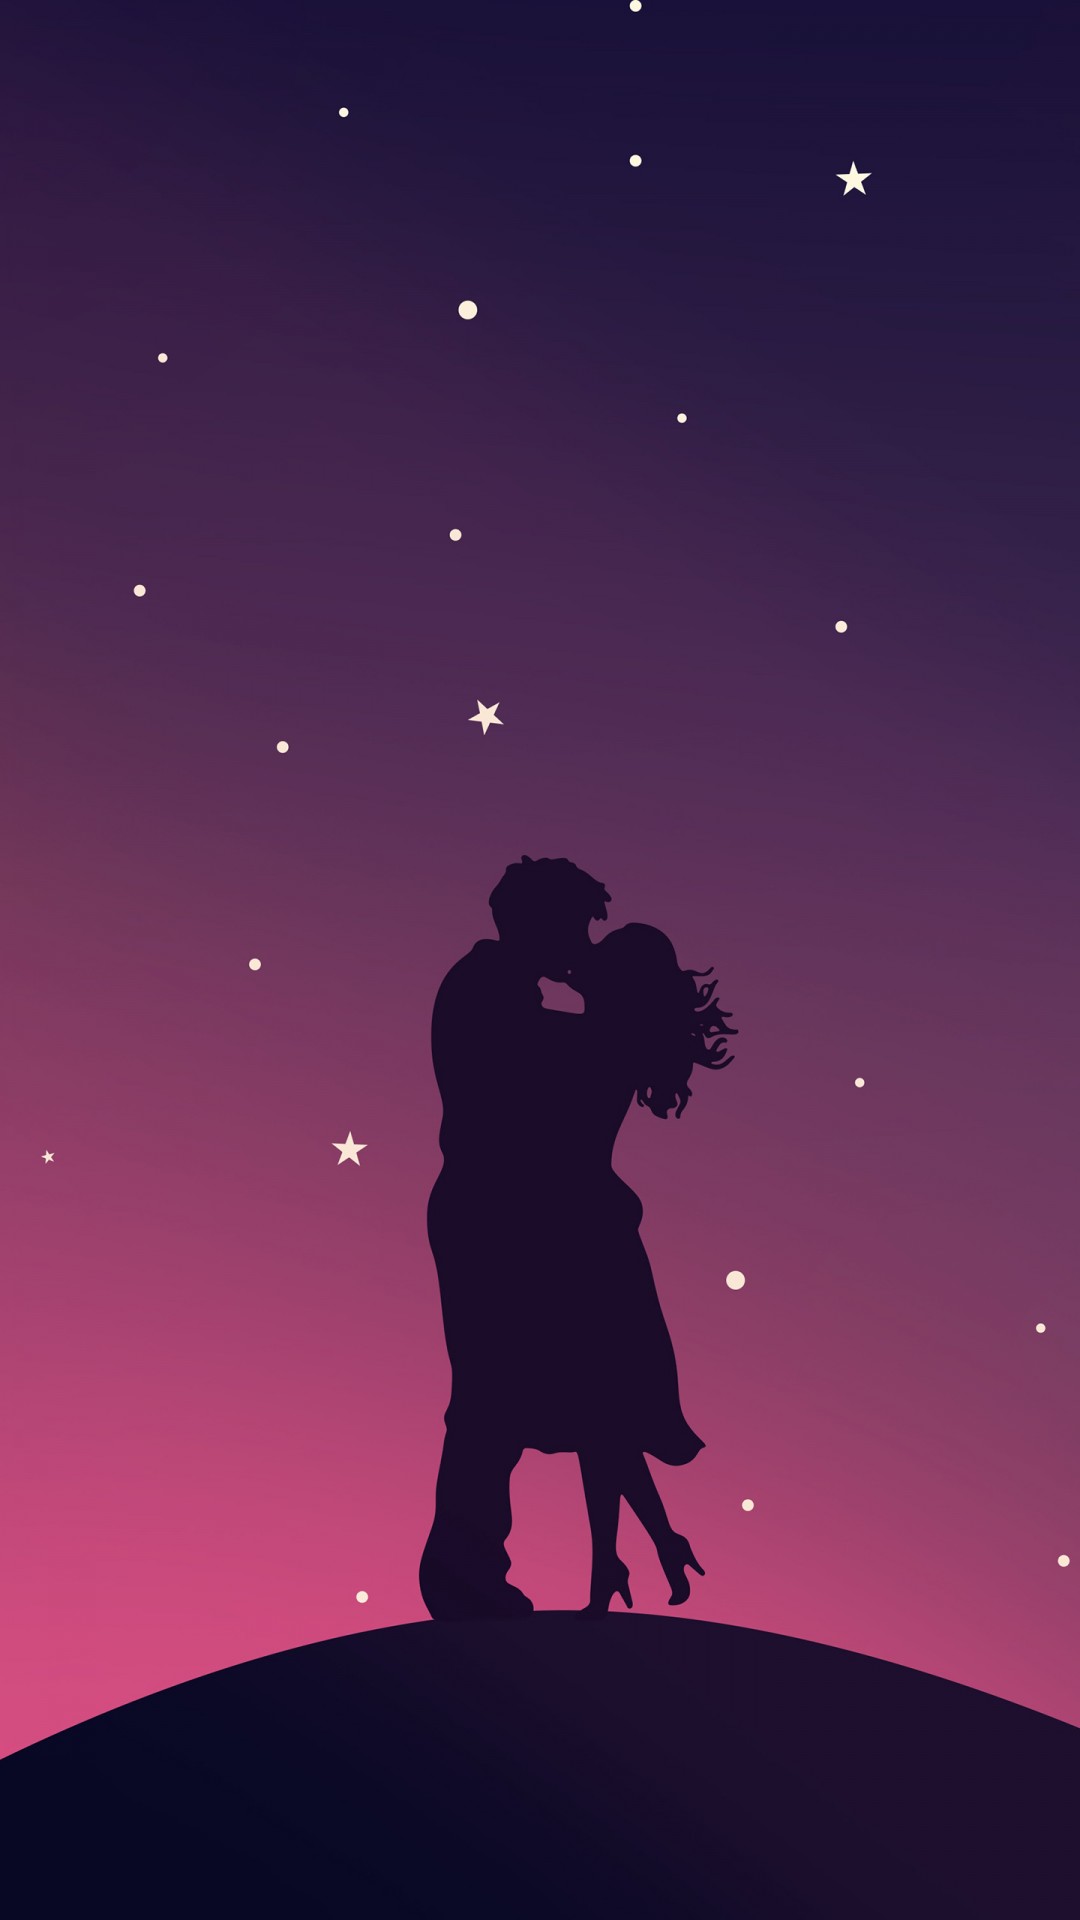 Kiss Android Wallpaper Hd Love - 1080x1920 Wallpaper 